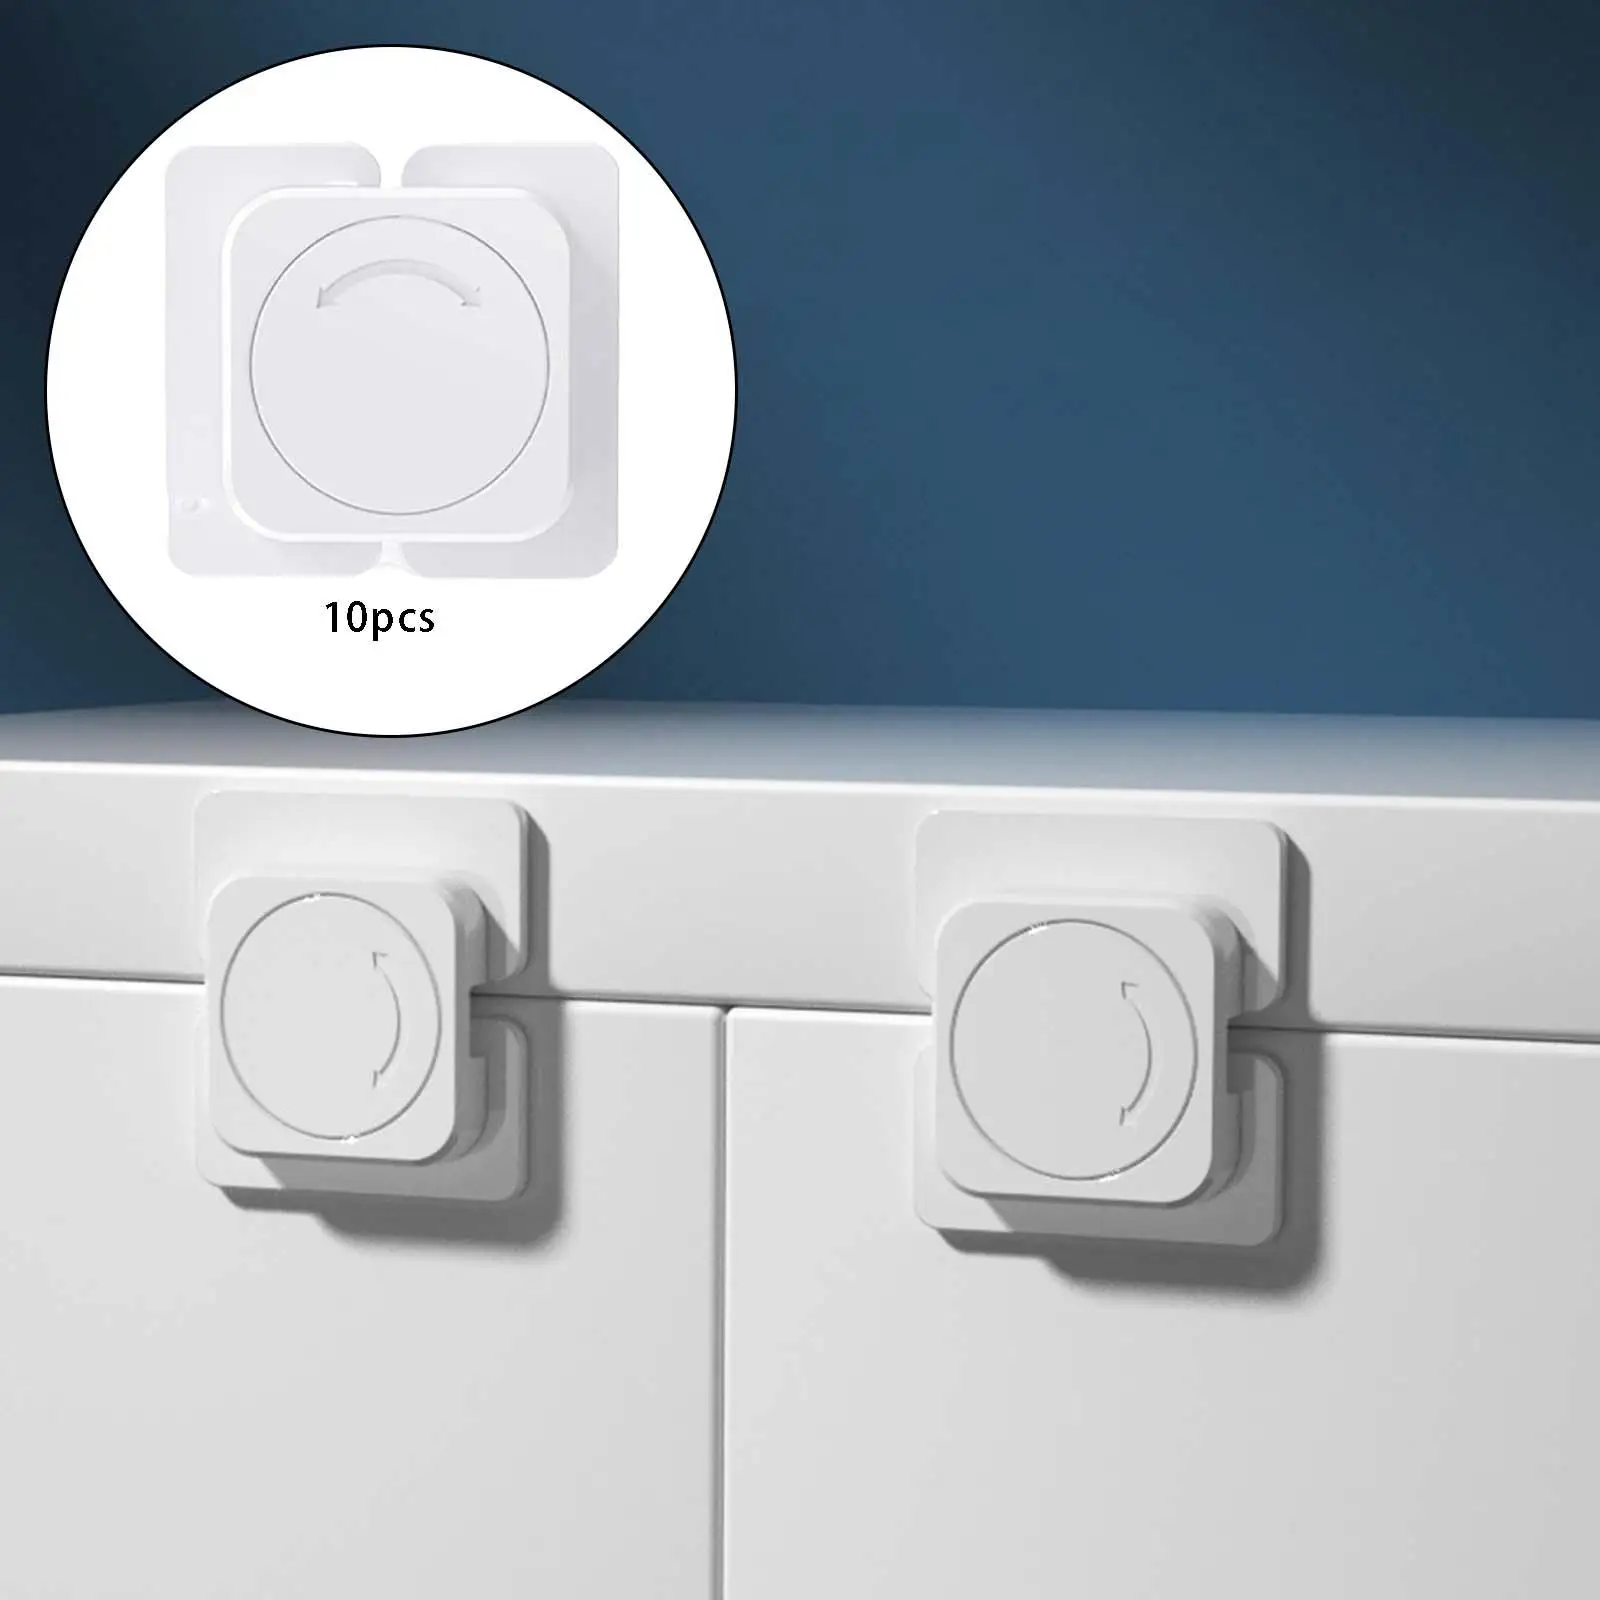 10Pcs Reusable Doors Locks Safety Rotary Locks for Cupboard Cabinet Freezer